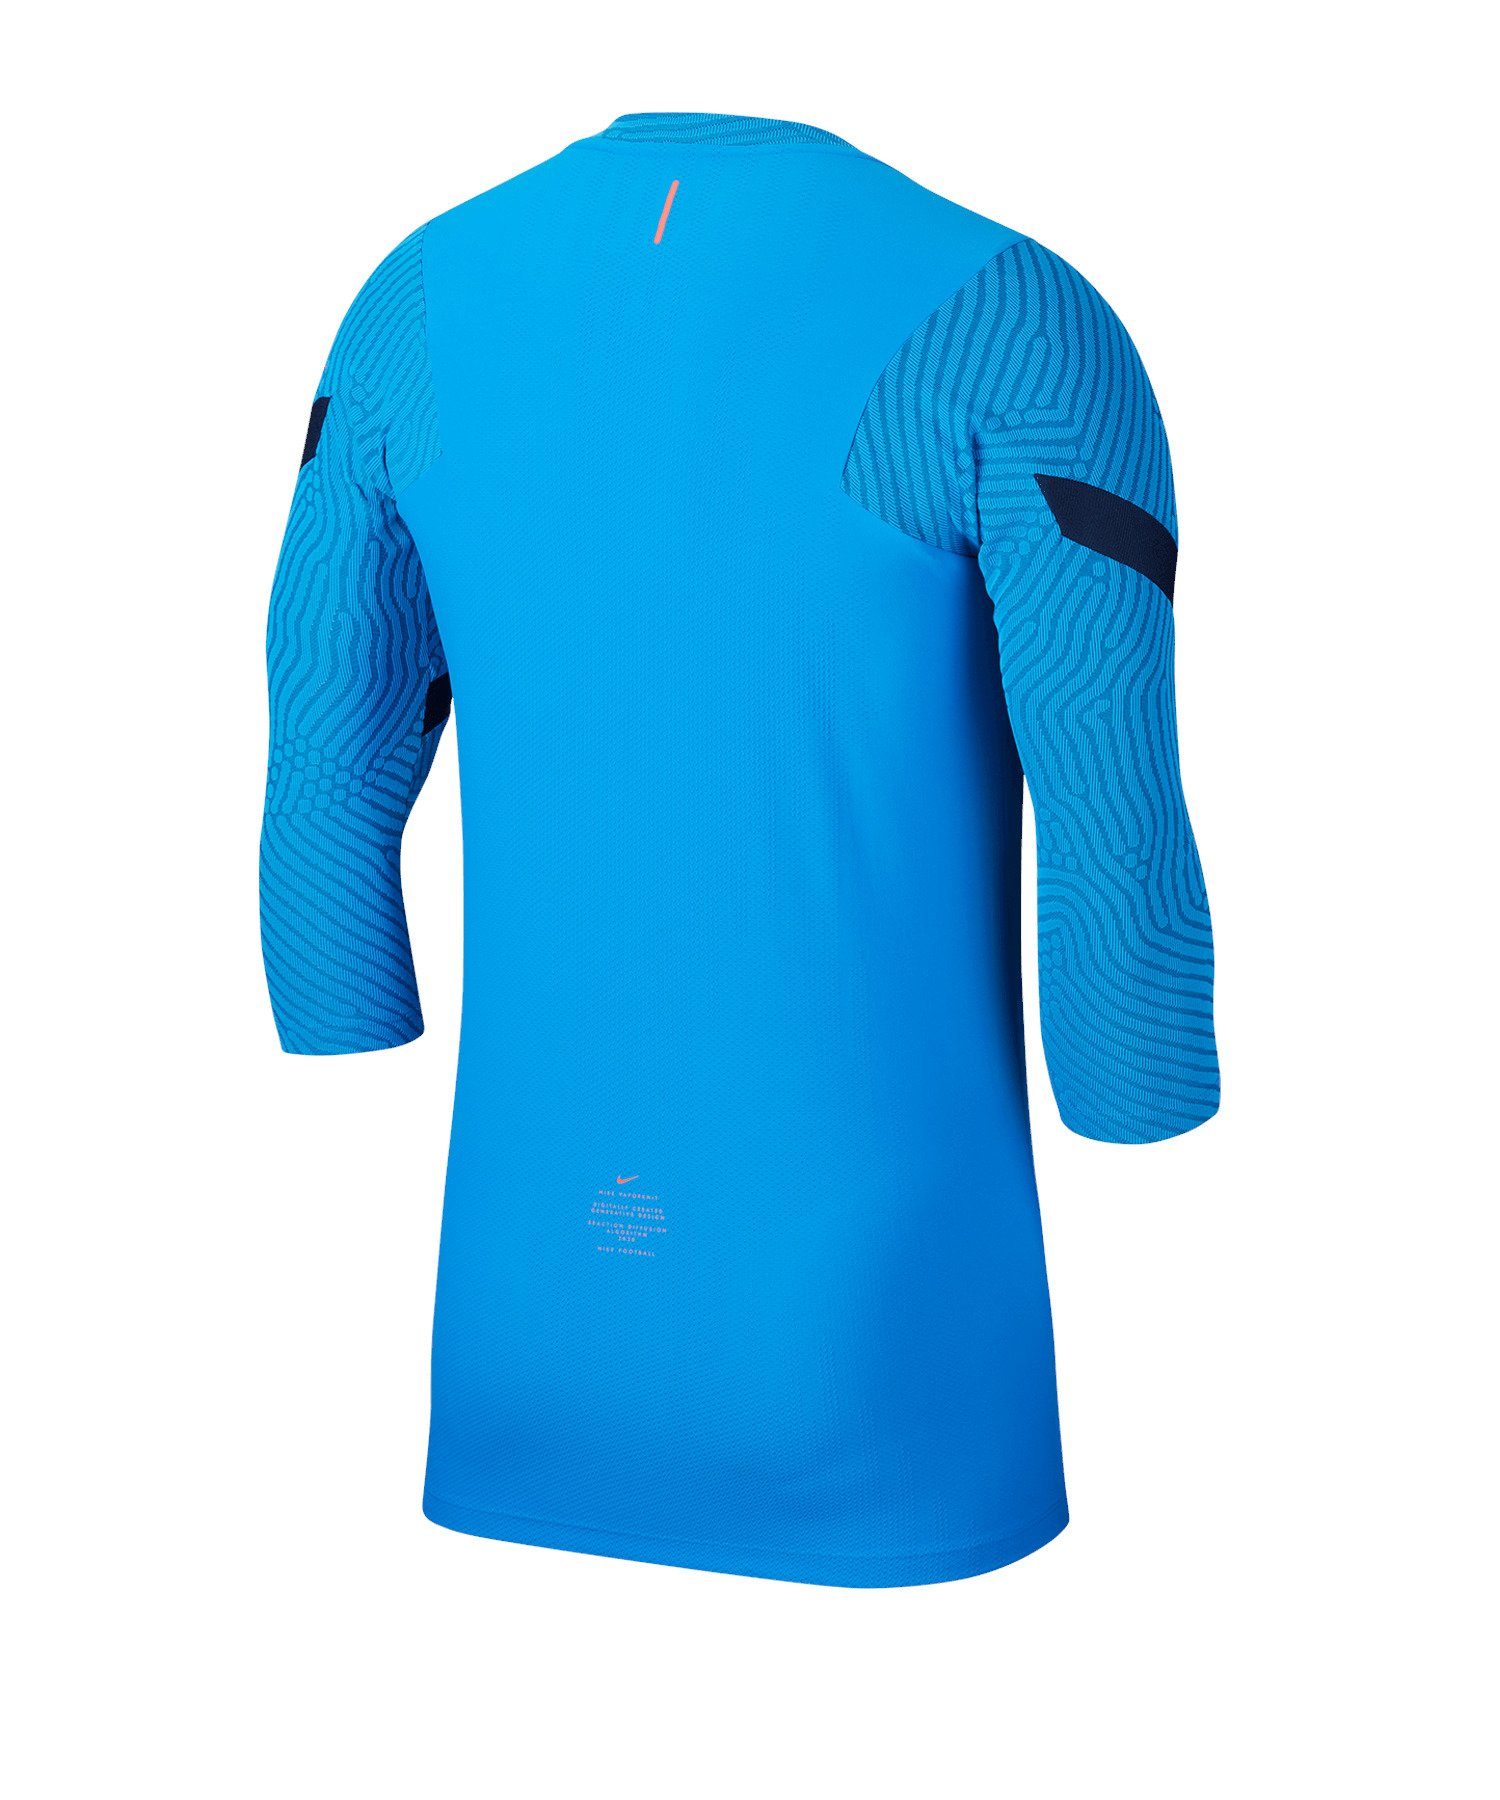 Nike Sweatshirt Strike Top Drill 1/4 Zip LS Vaporknit